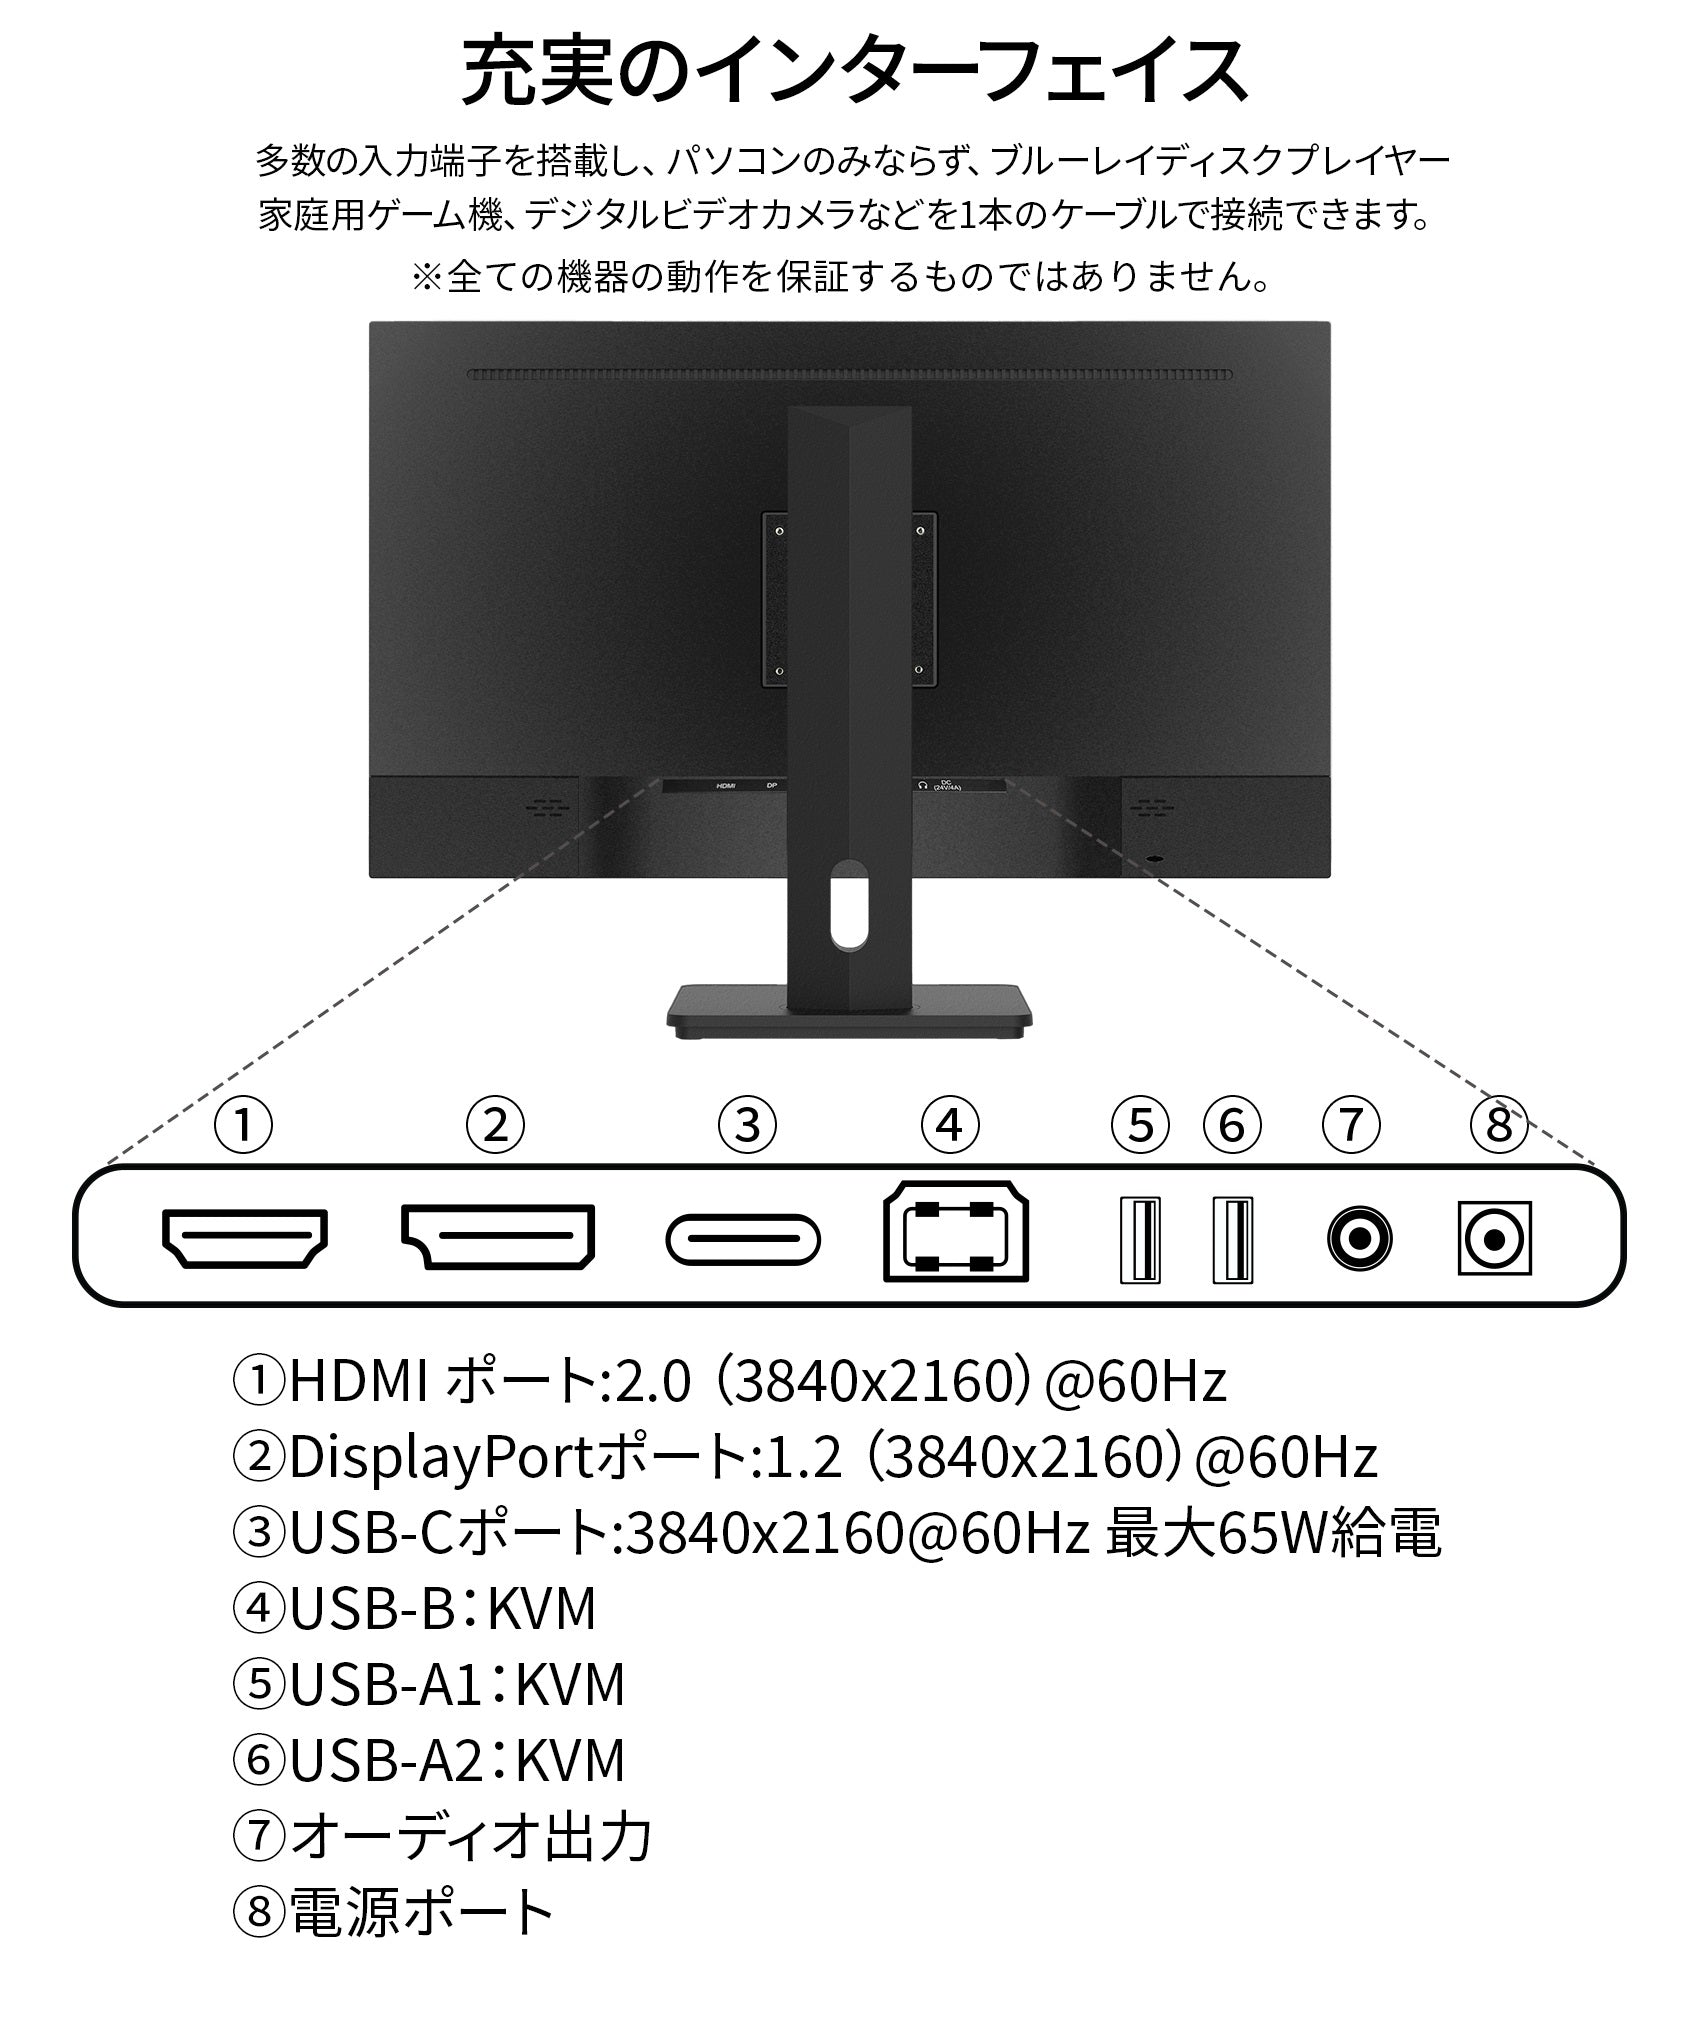 JAPANNEXT 28インチ 4Kモニター USB-C対応